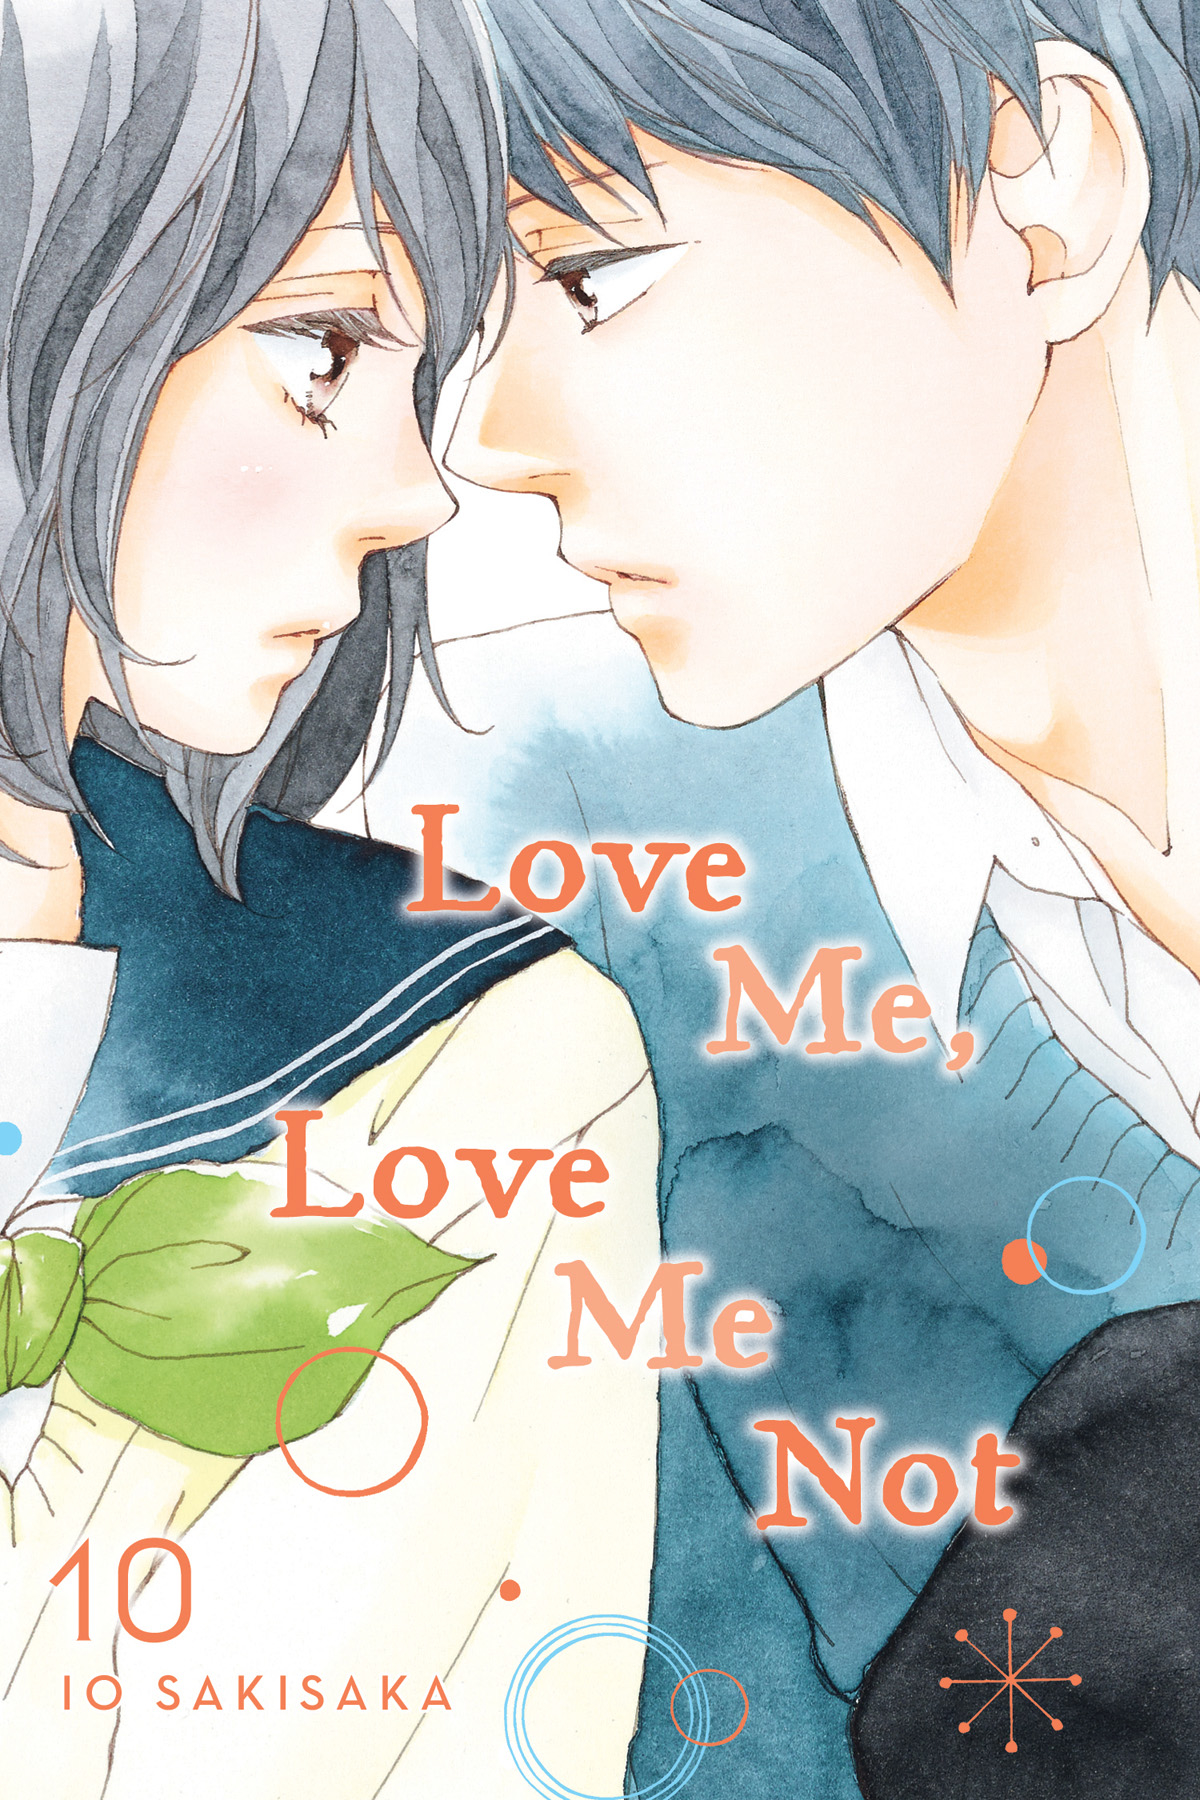 Love Me Love Me Not Manga Volume 10